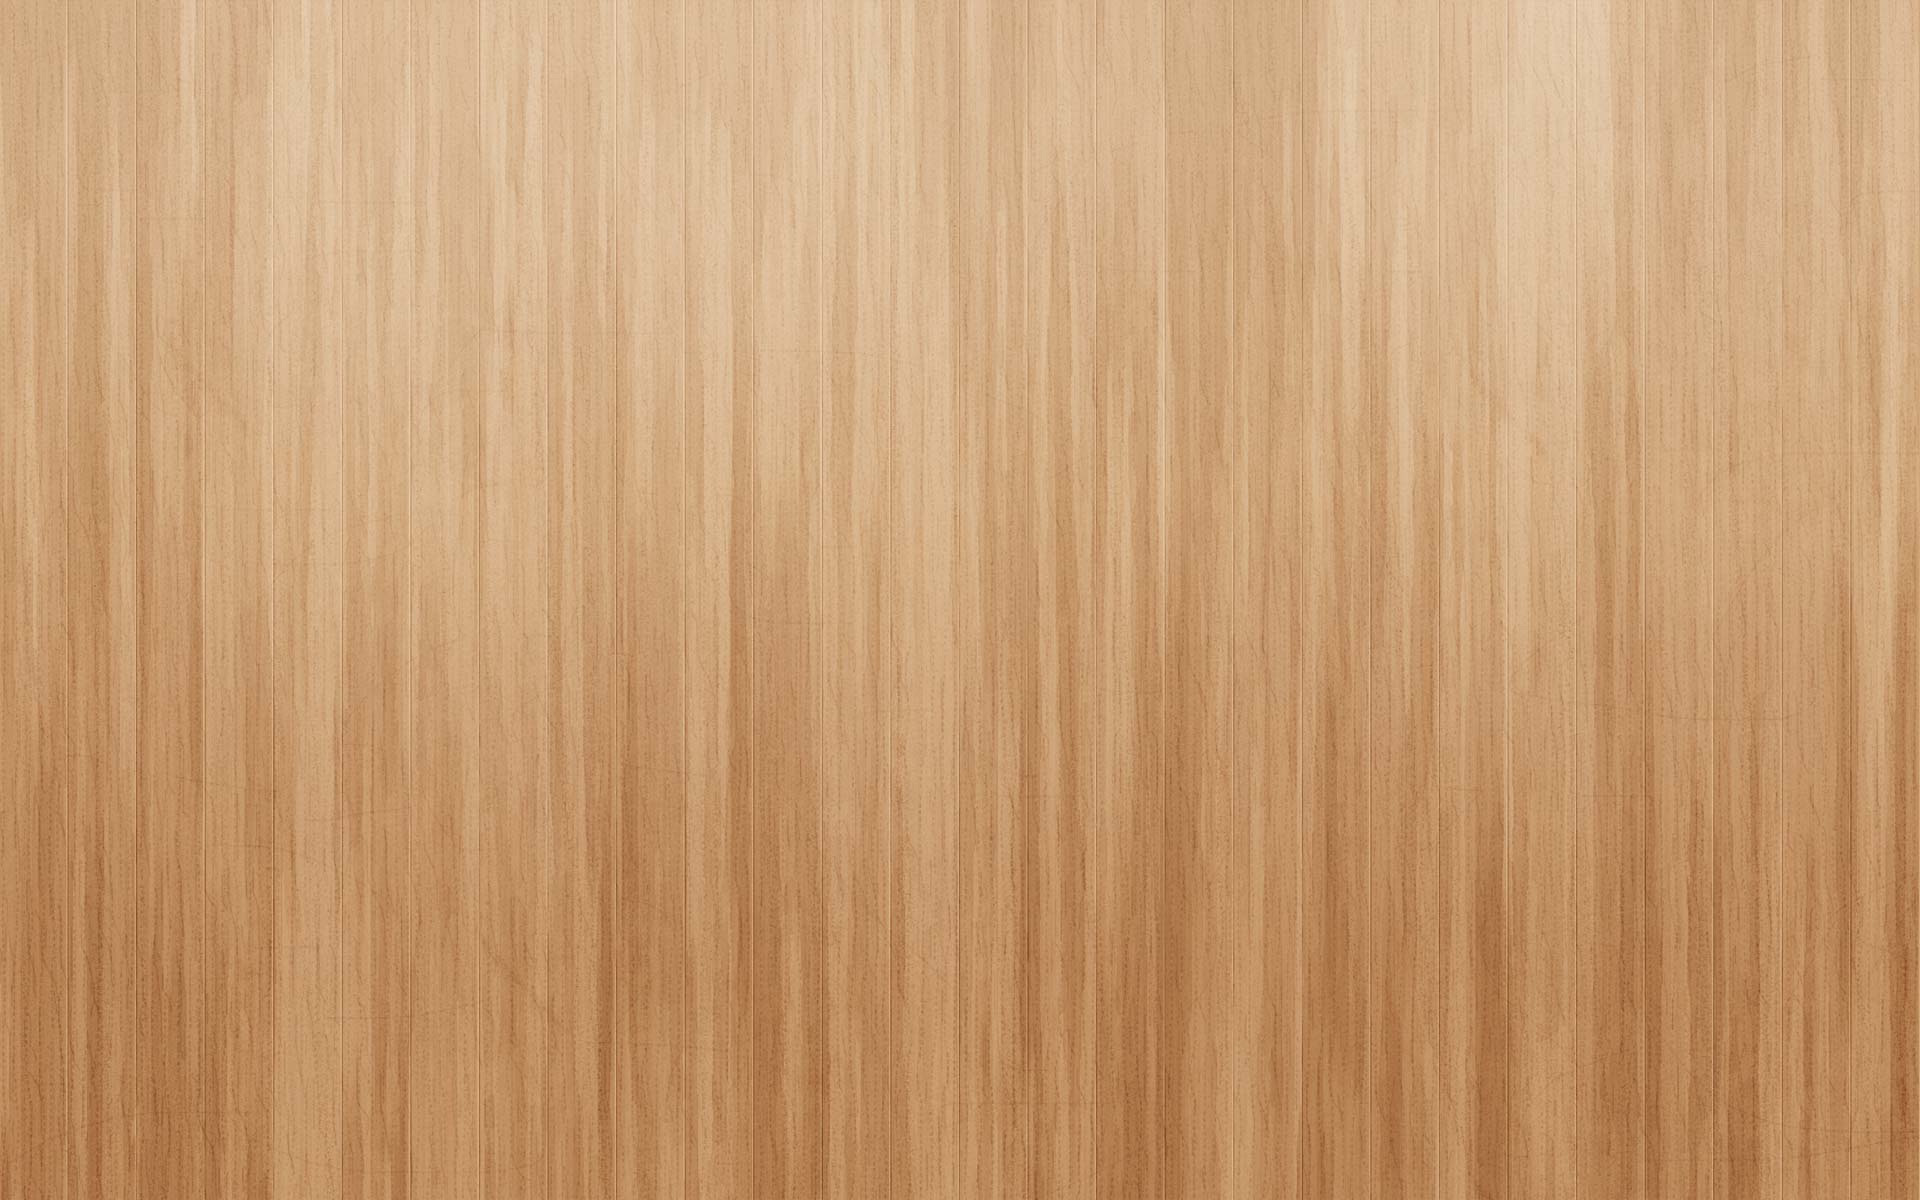 keyshot wood texture